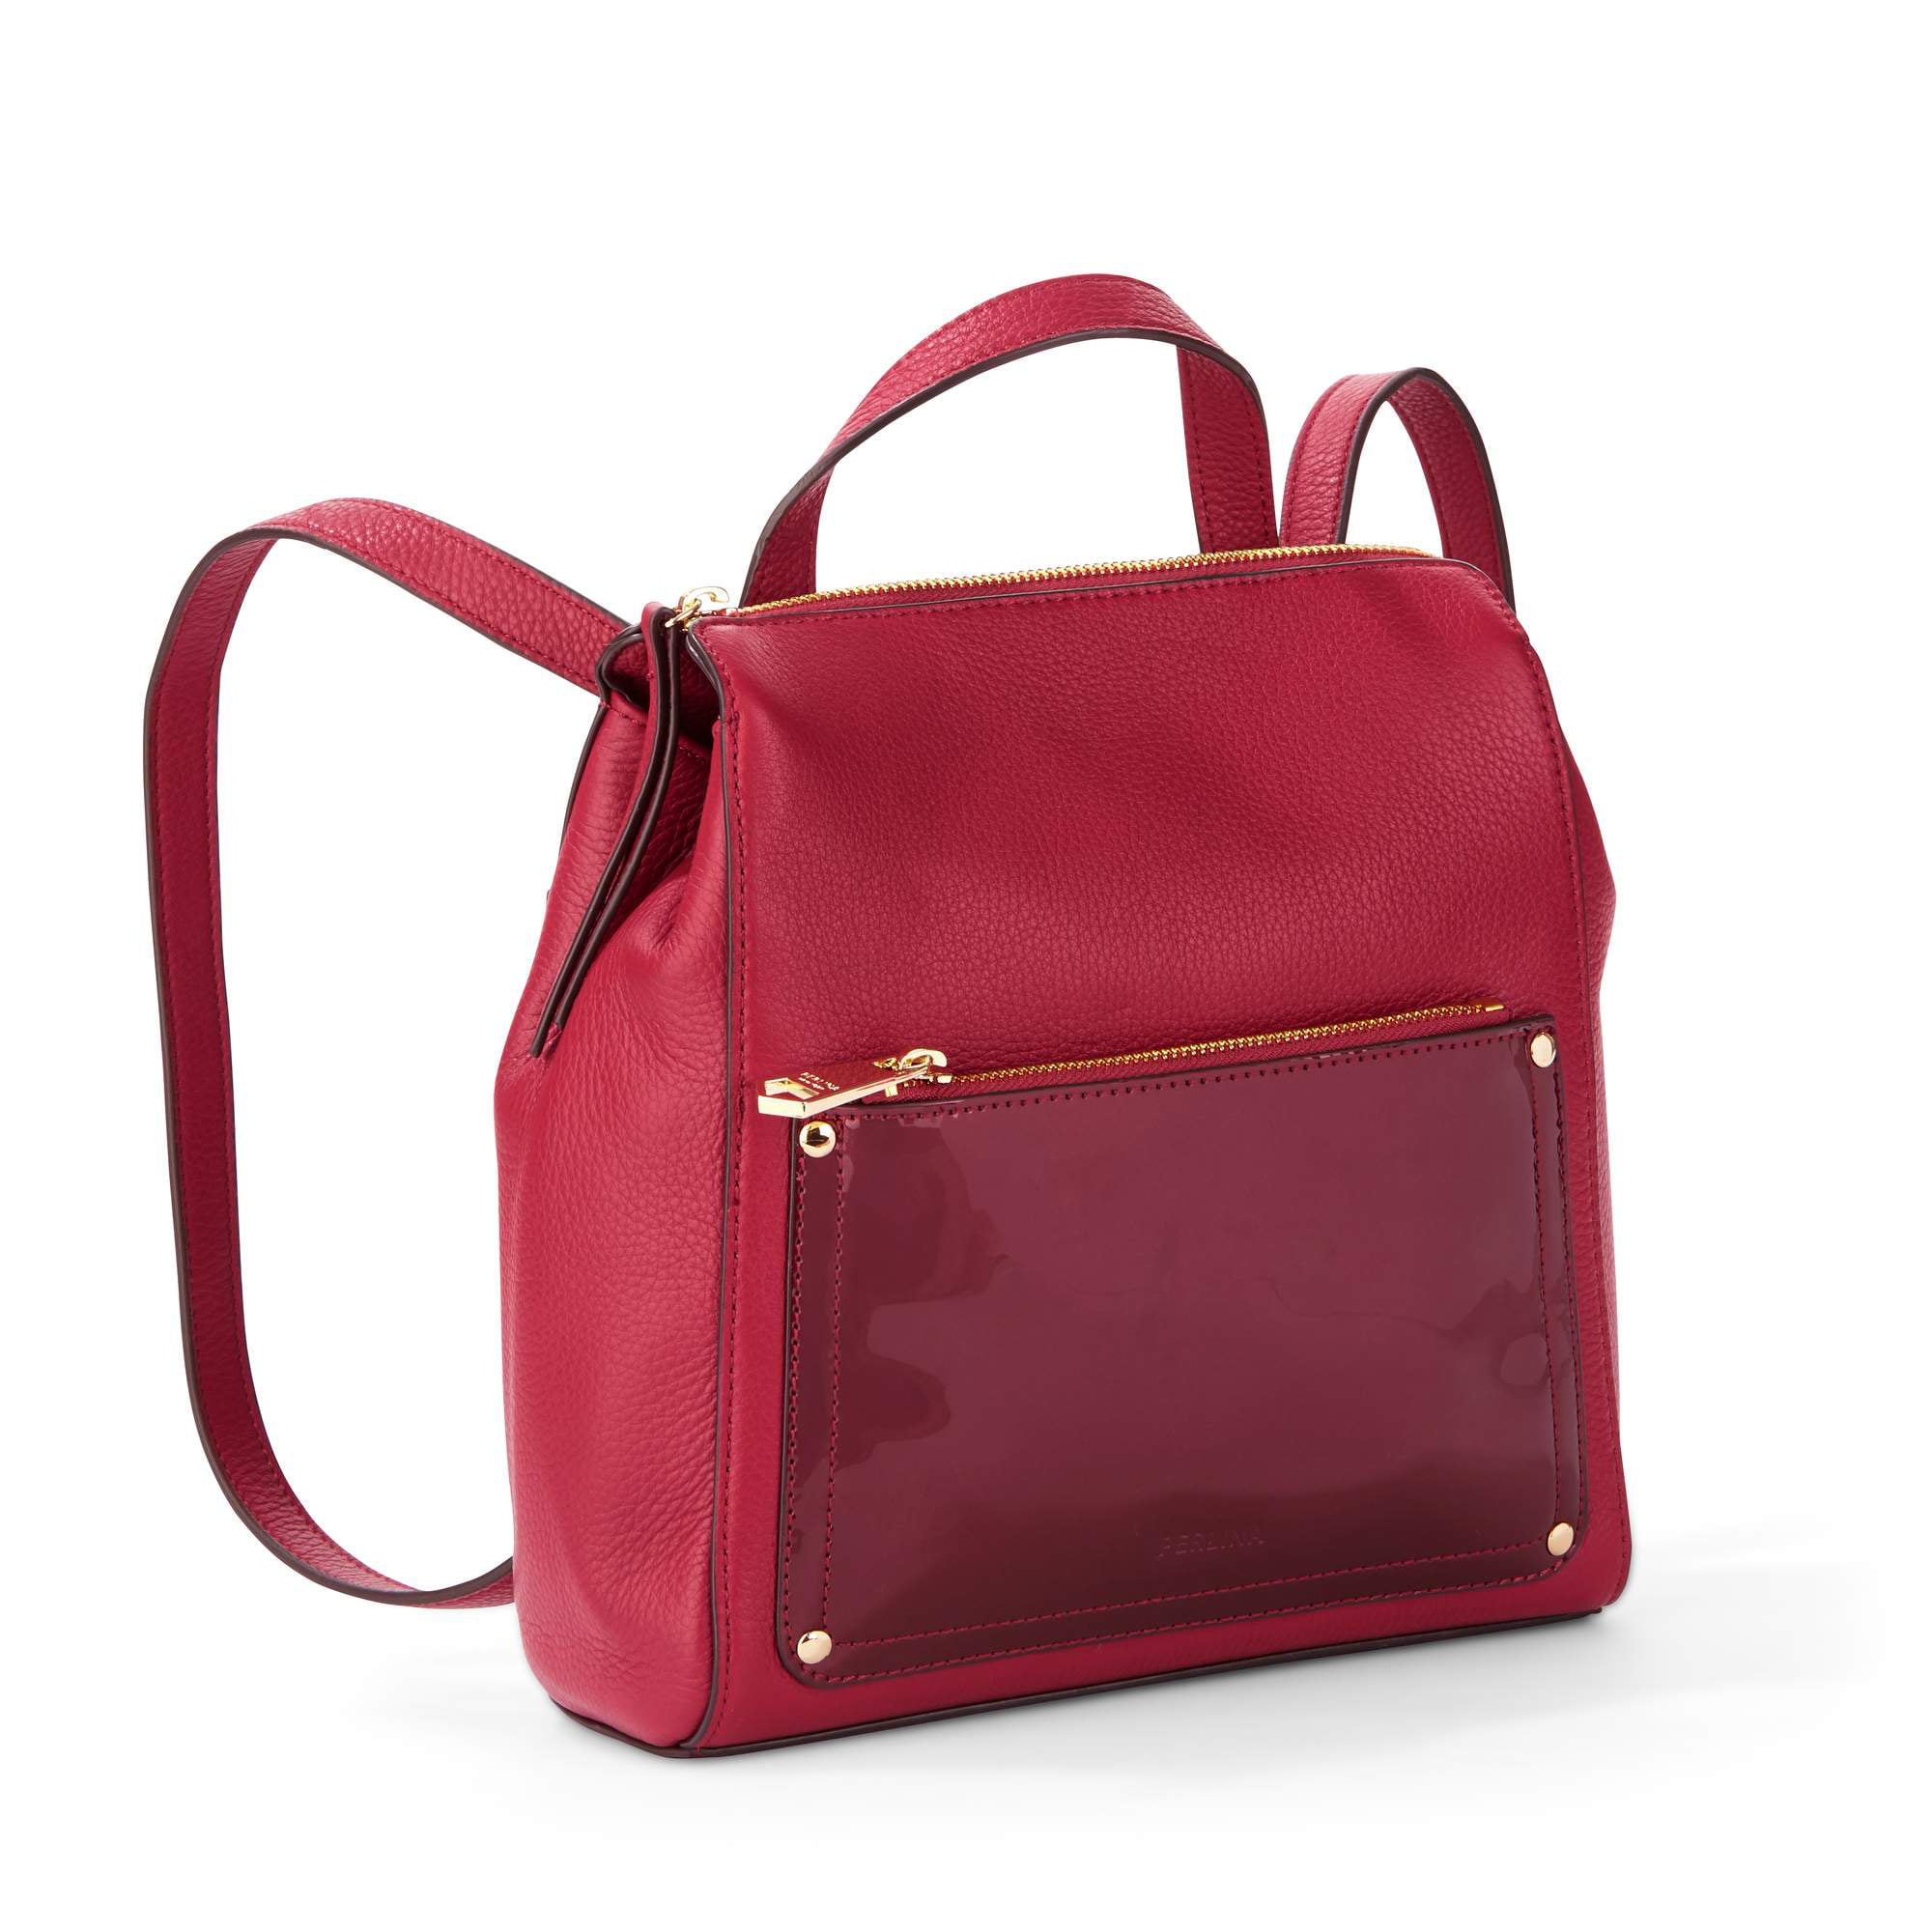 Perlina - Judi Convertible Small Leather Backpack - Walmart.com ...